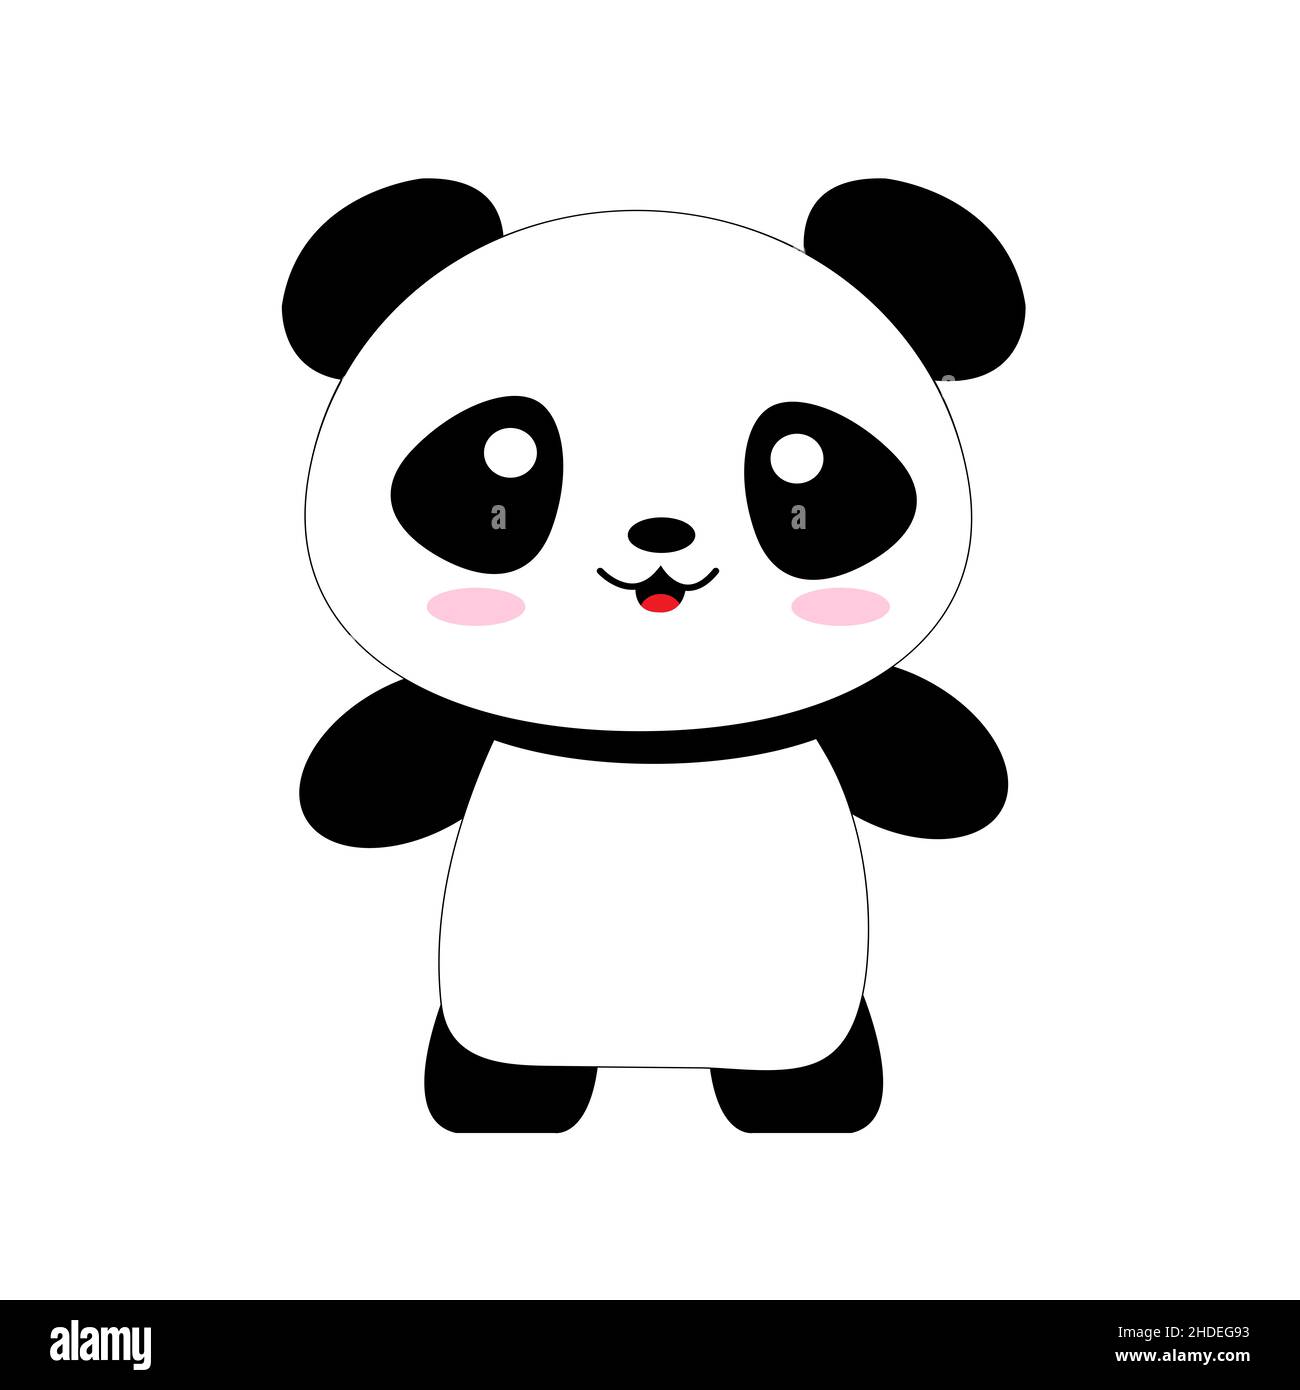 Cute Panda illustration. Panda Clip art or image Stock Photo - Alamy